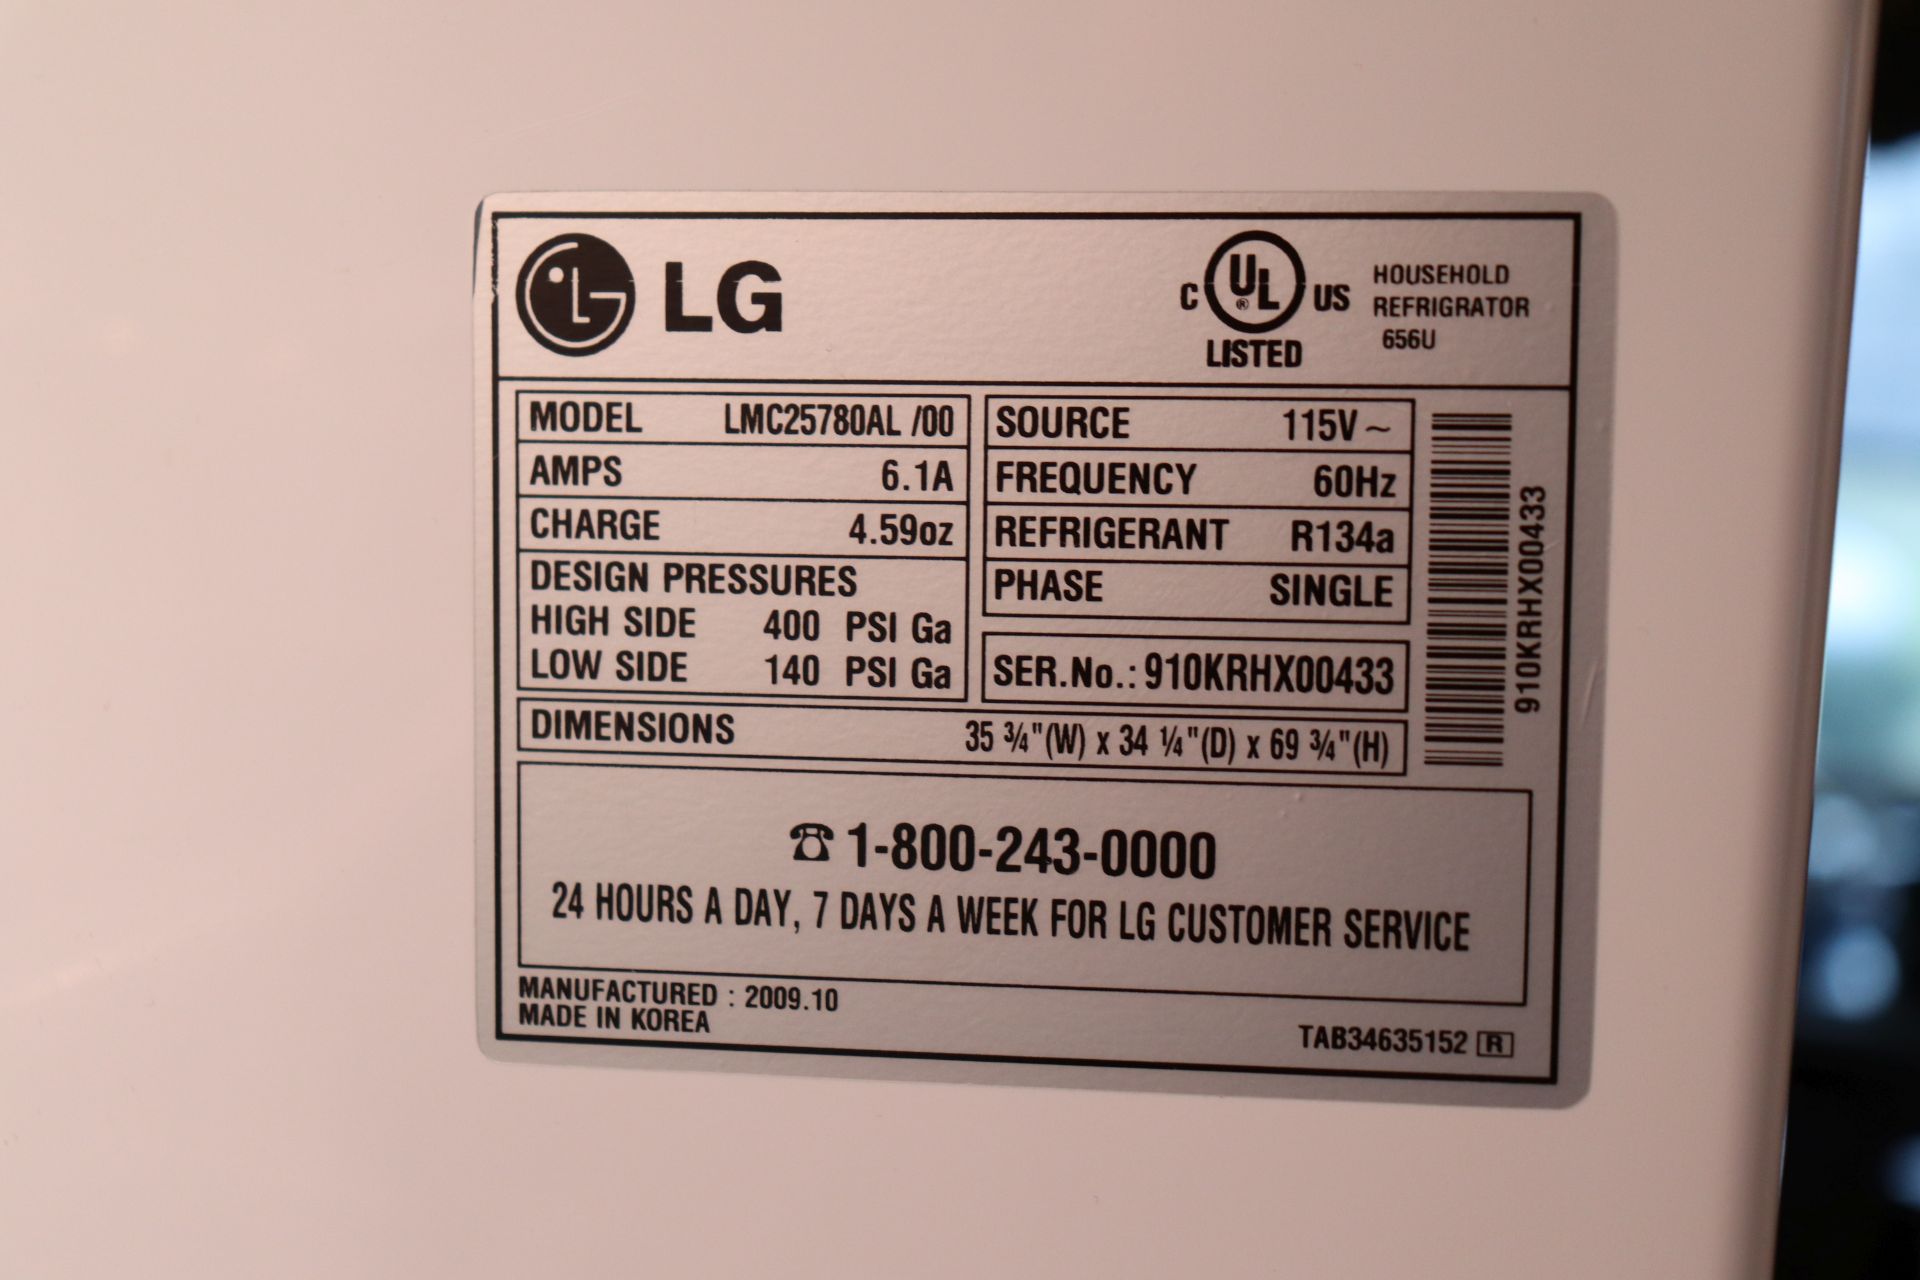 LG model LMC25780AL refrigerator - Image 3 of 3